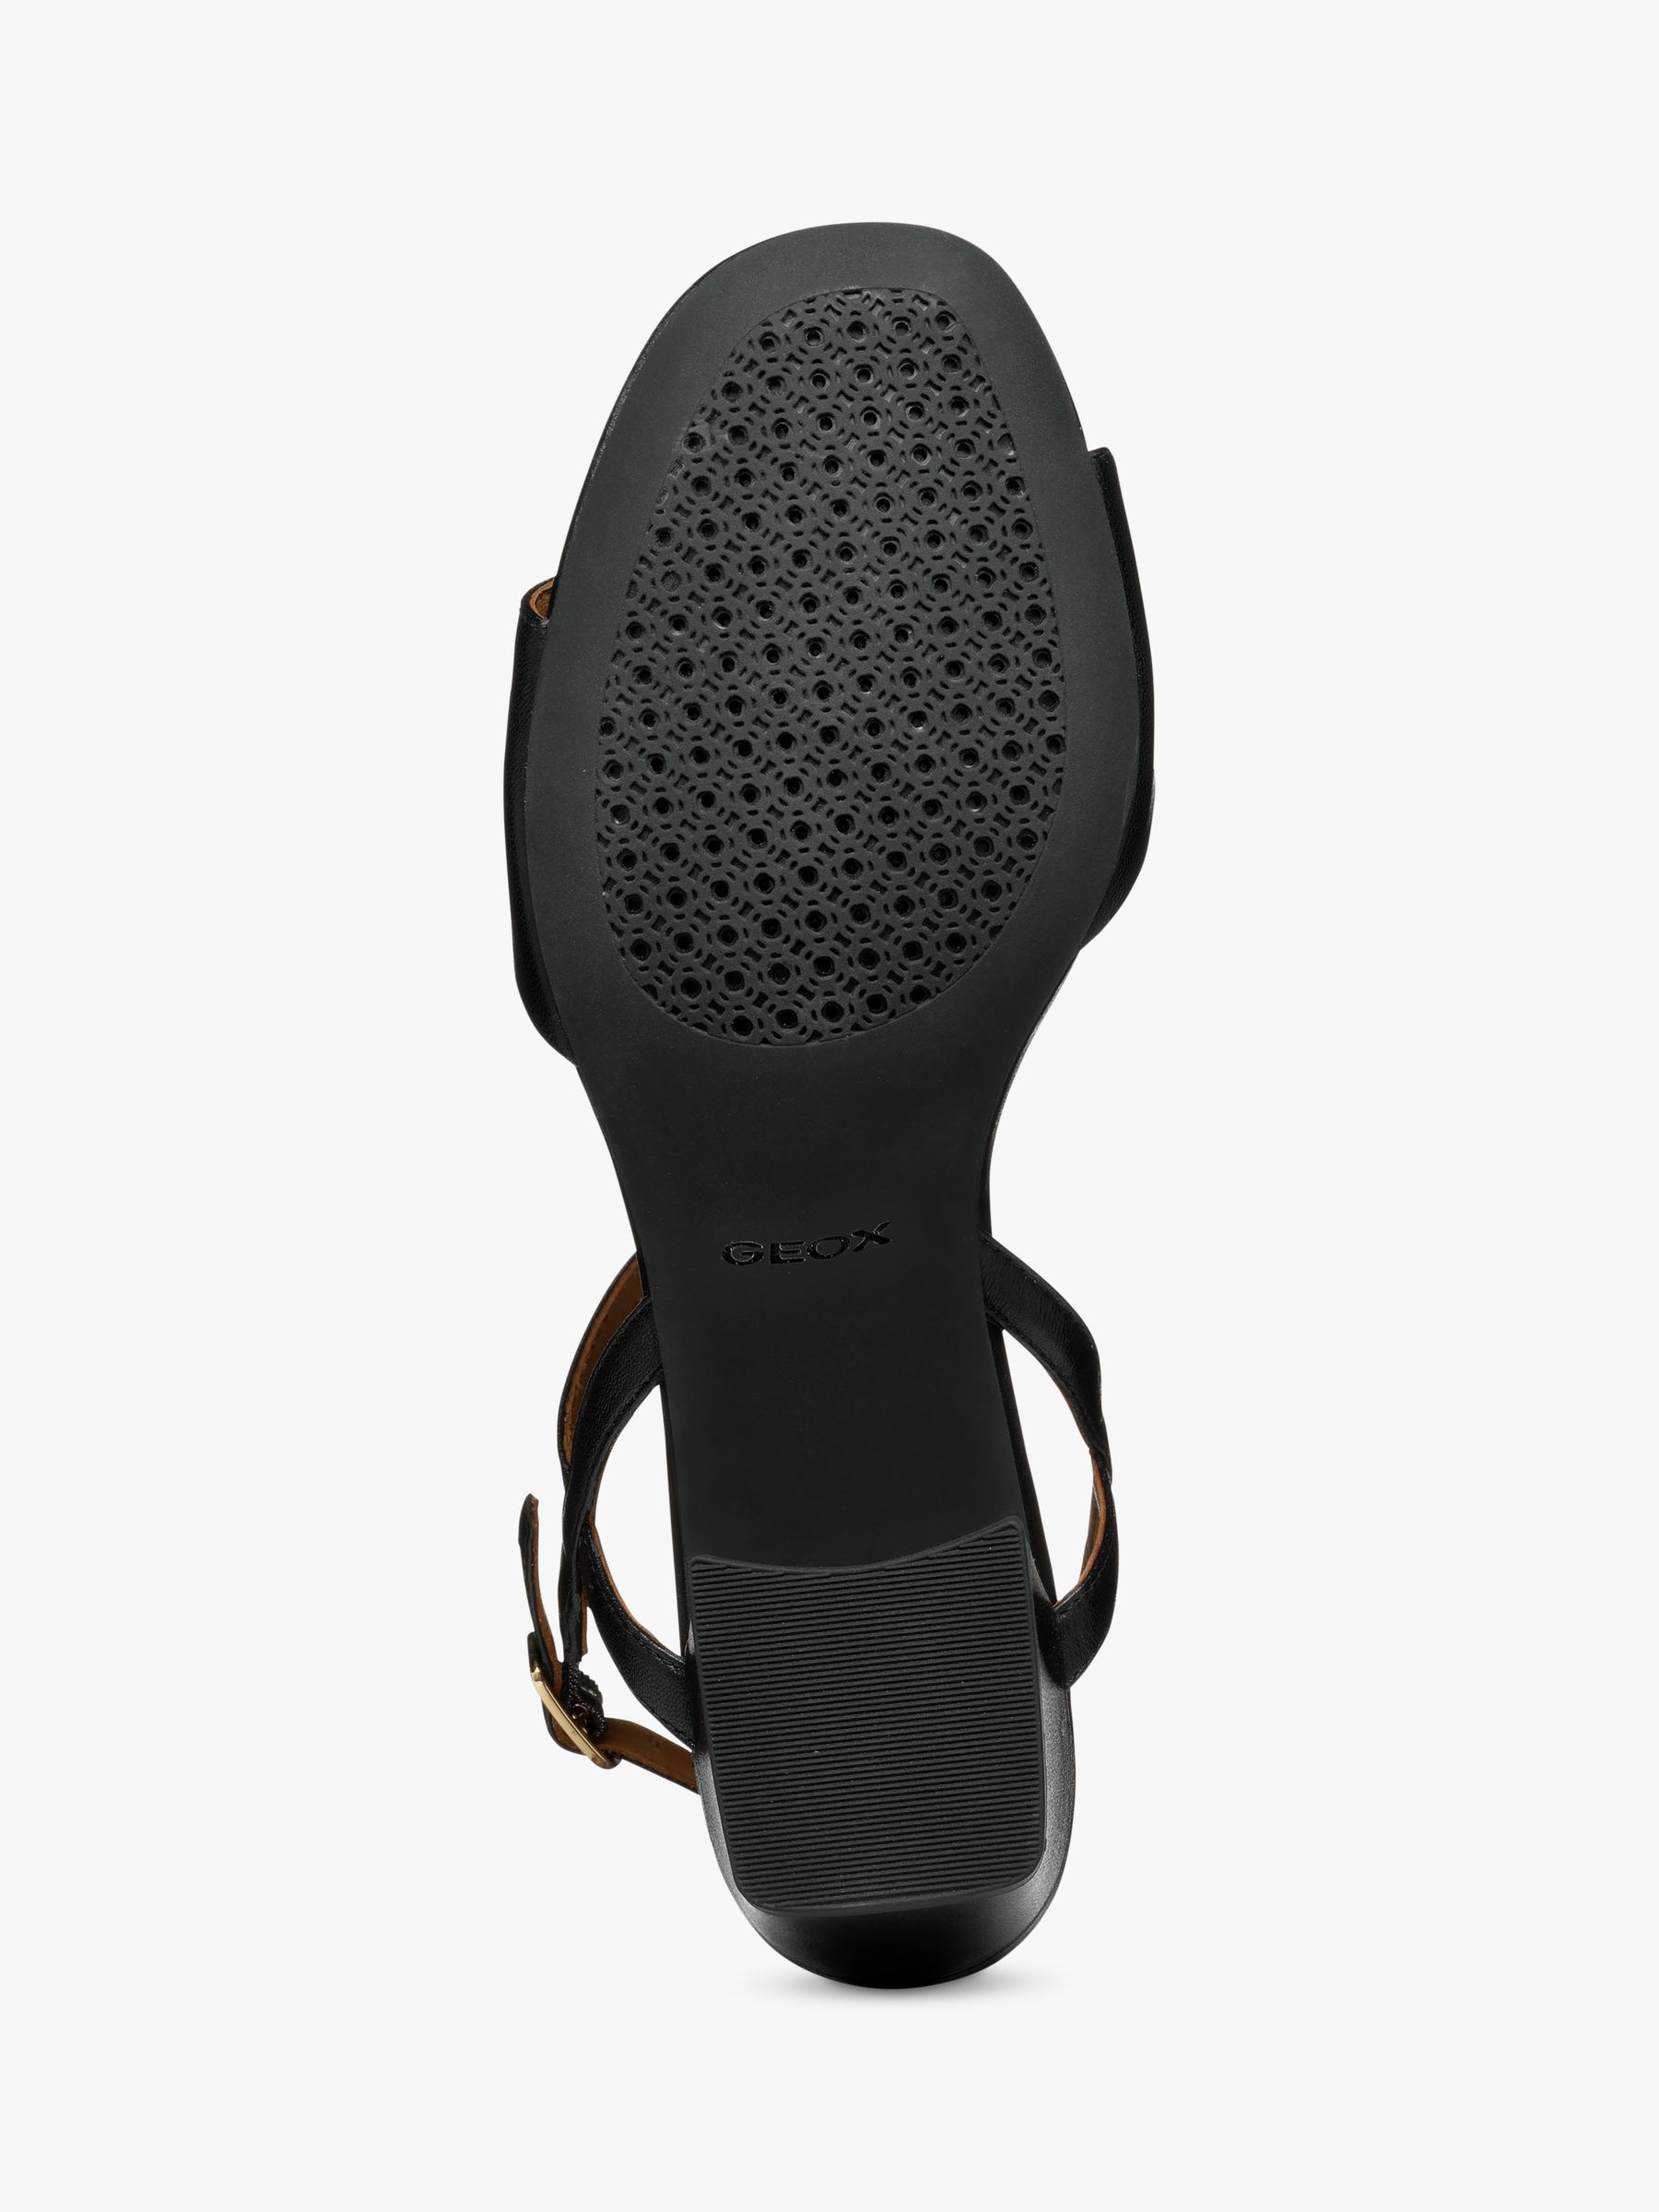 Geox New Eraklia Leather Sandals, Black, EU39.5